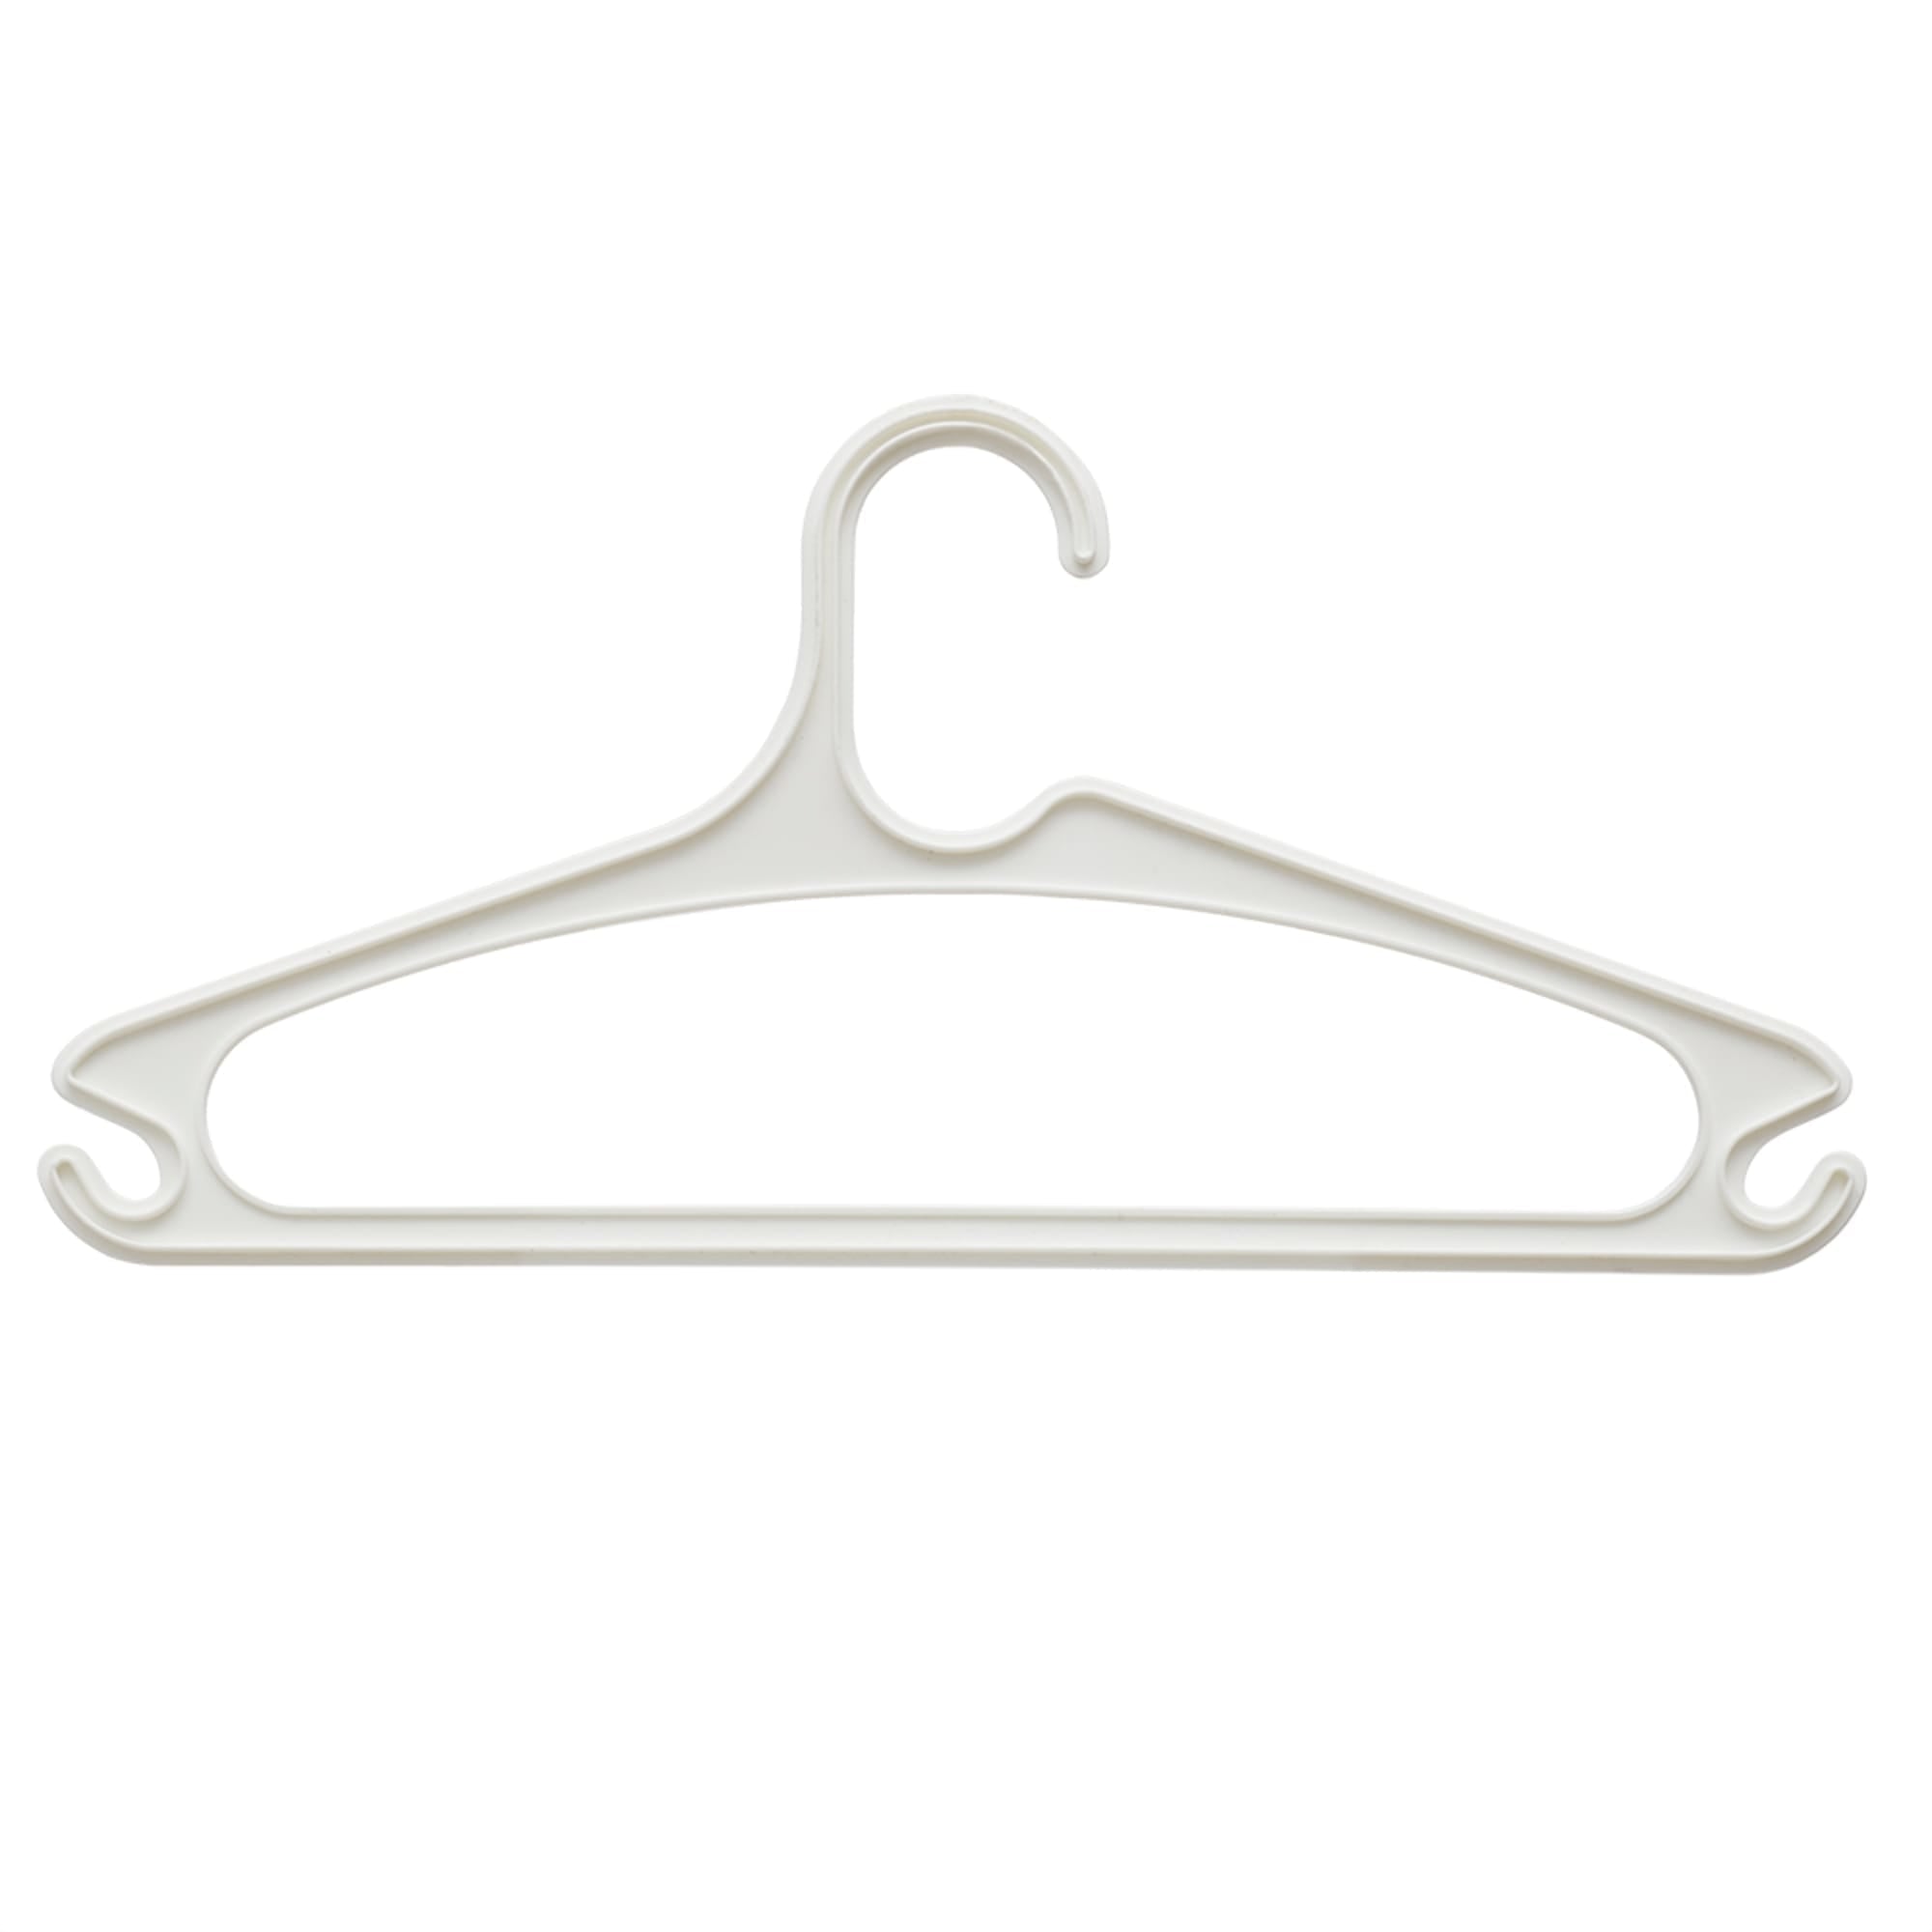 Home Basics 10 Piece Plastic Hanger Set, White, STORAGE ORGANIZATION